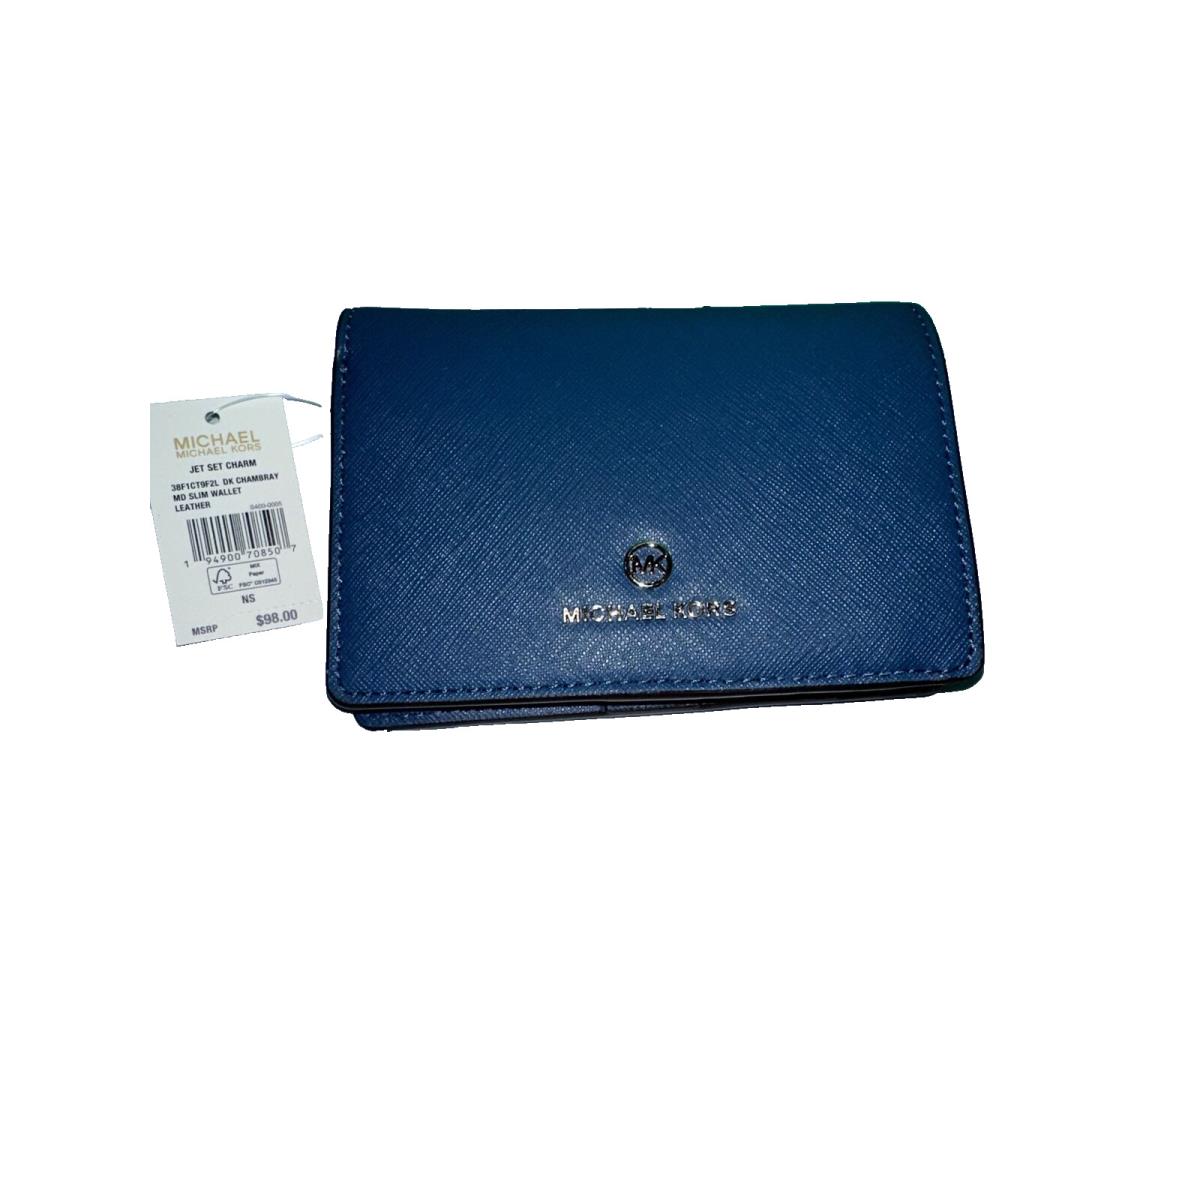 Michael Kors Jet Set Charm Blue Leather Medium Slim Wallet